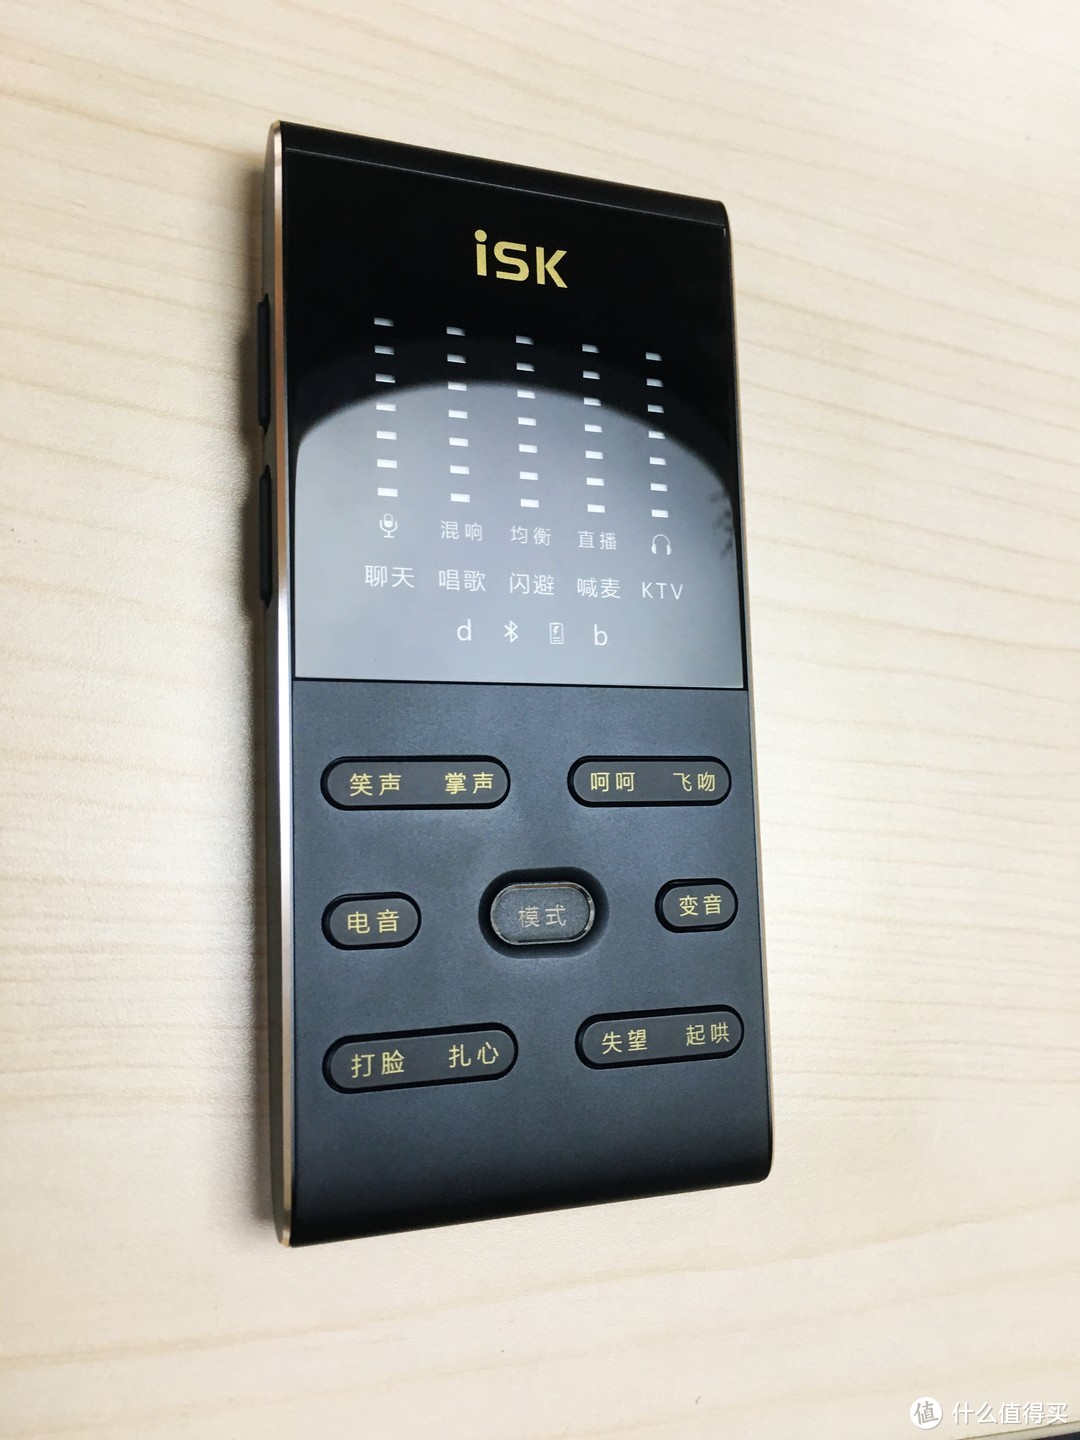 iSK SK8手机蓝牙声卡【实拍】